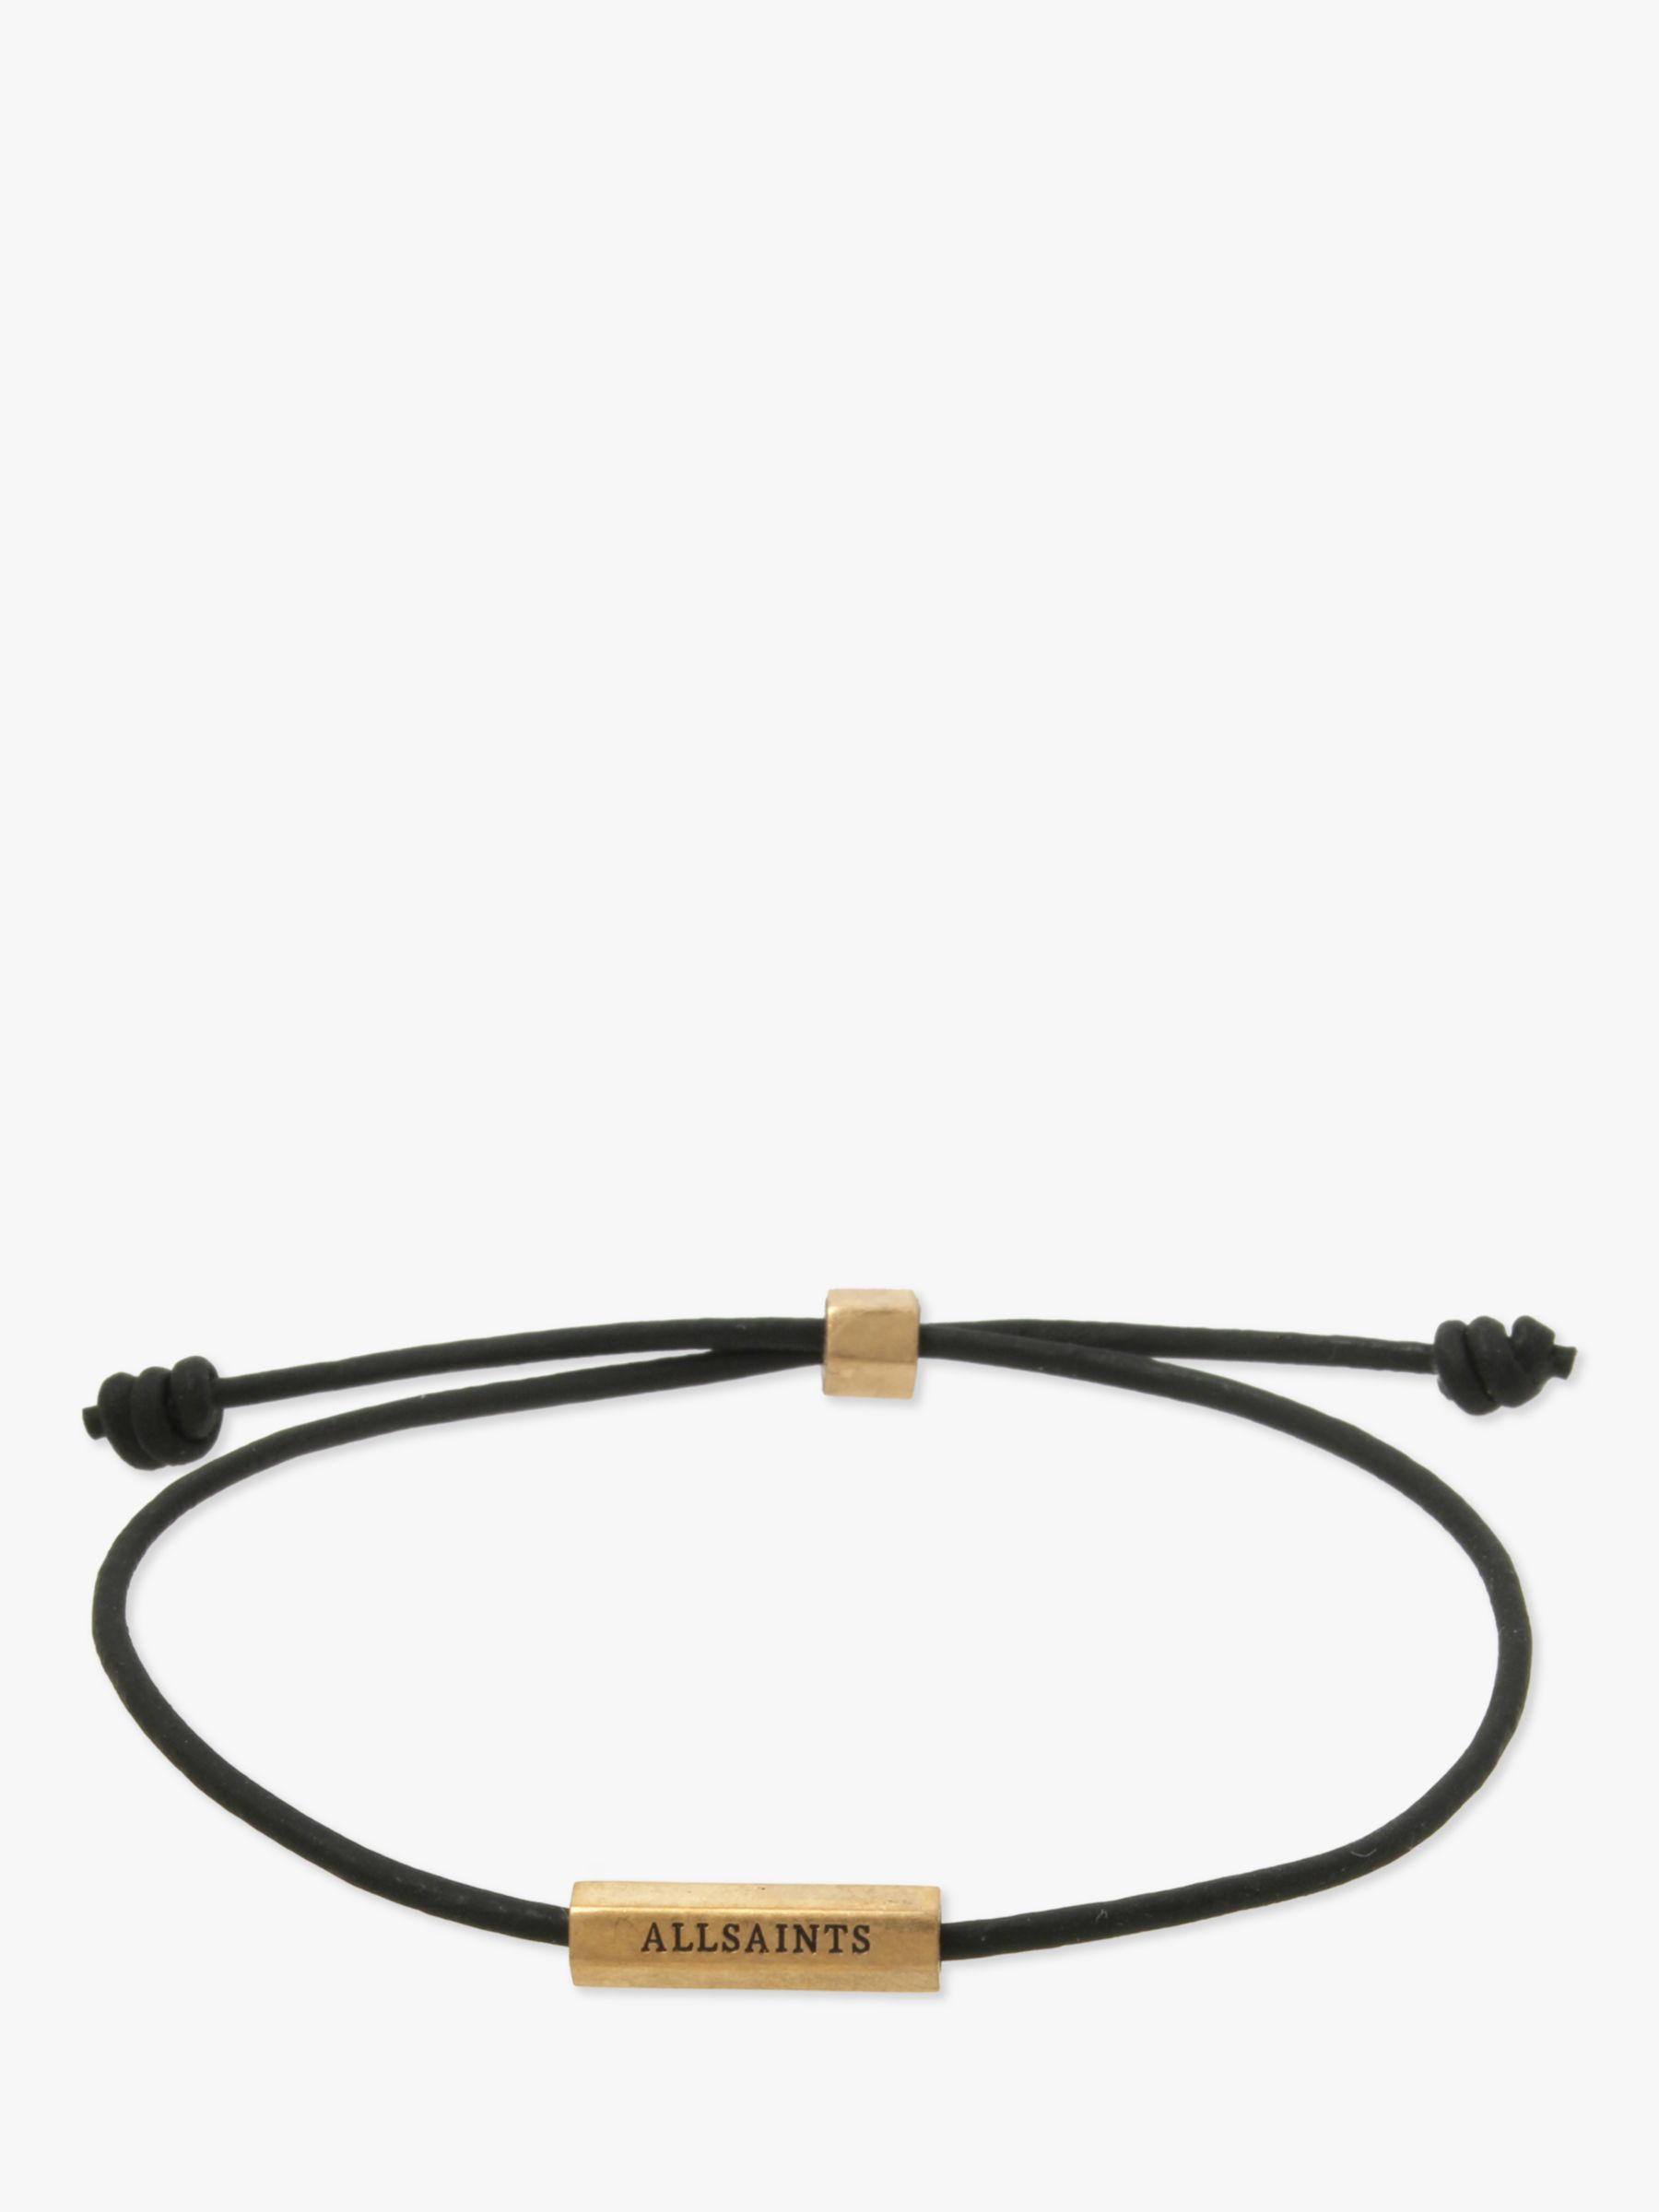 Buy AllSaints Leather Cord and Hexagon Bar Friendship Bracelet, Gold/Black Online at johnlewis.com